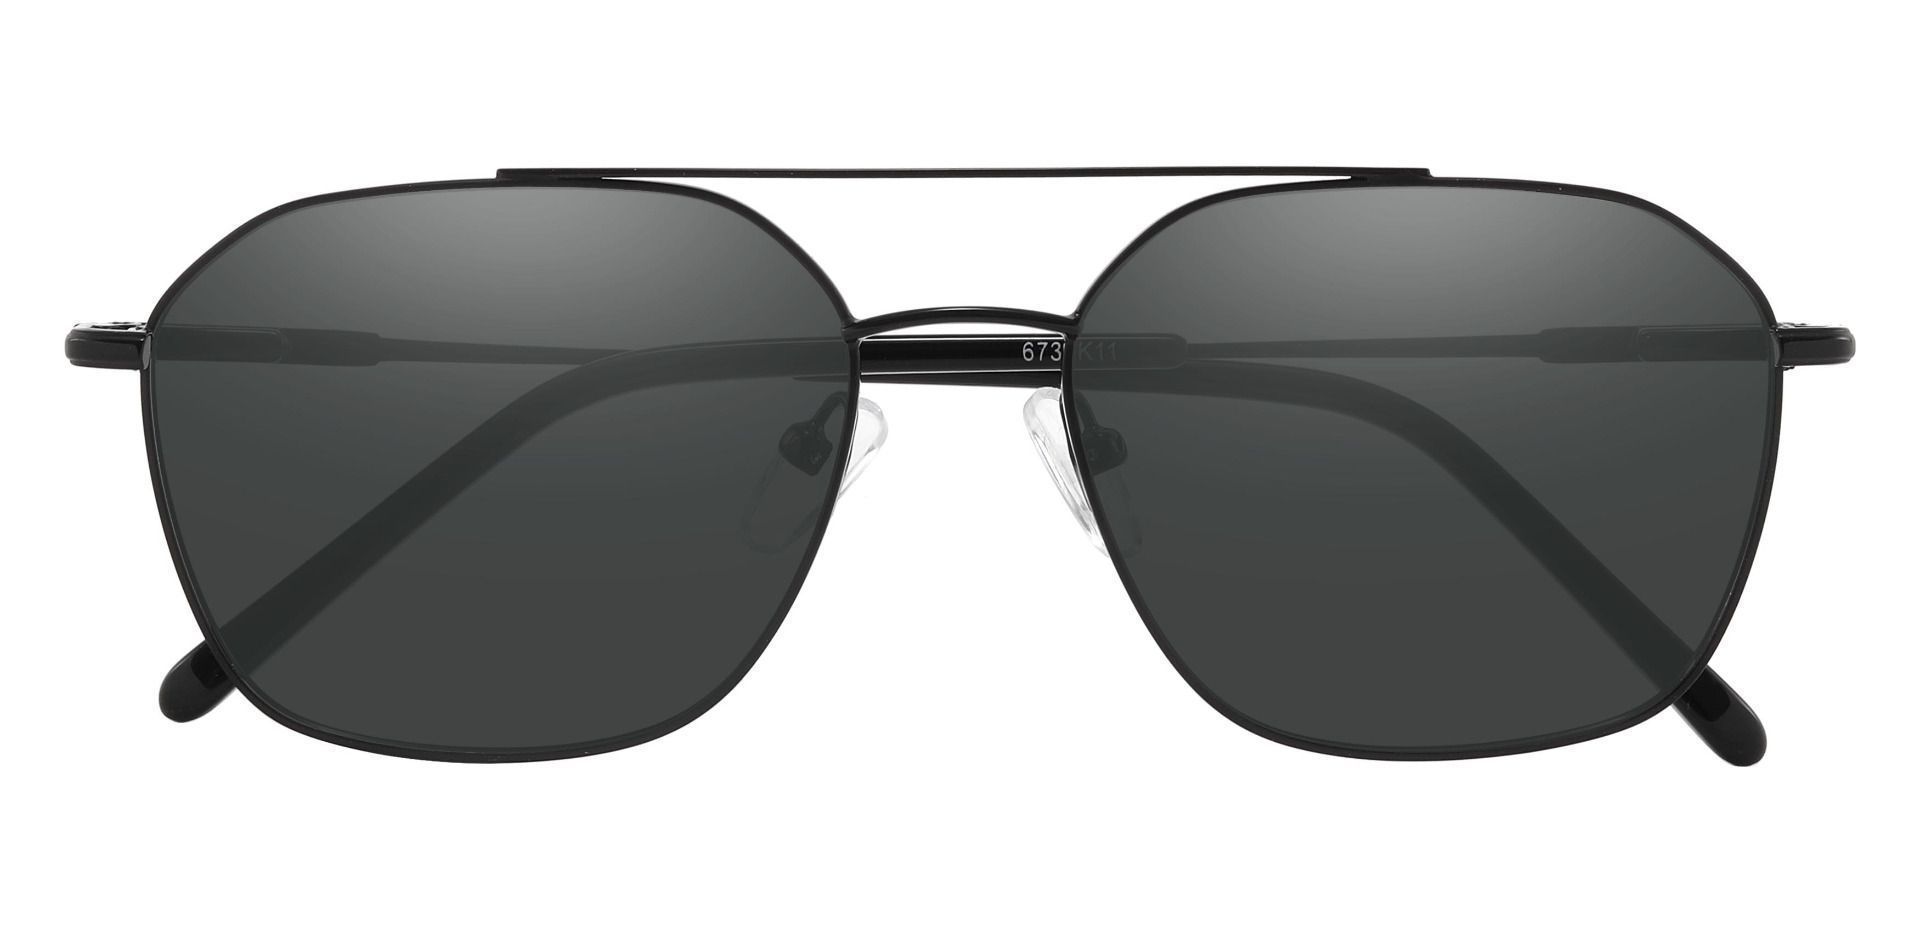 Harvey Aviator Prescription Sunglasses - Black Frame With Gray Lenses